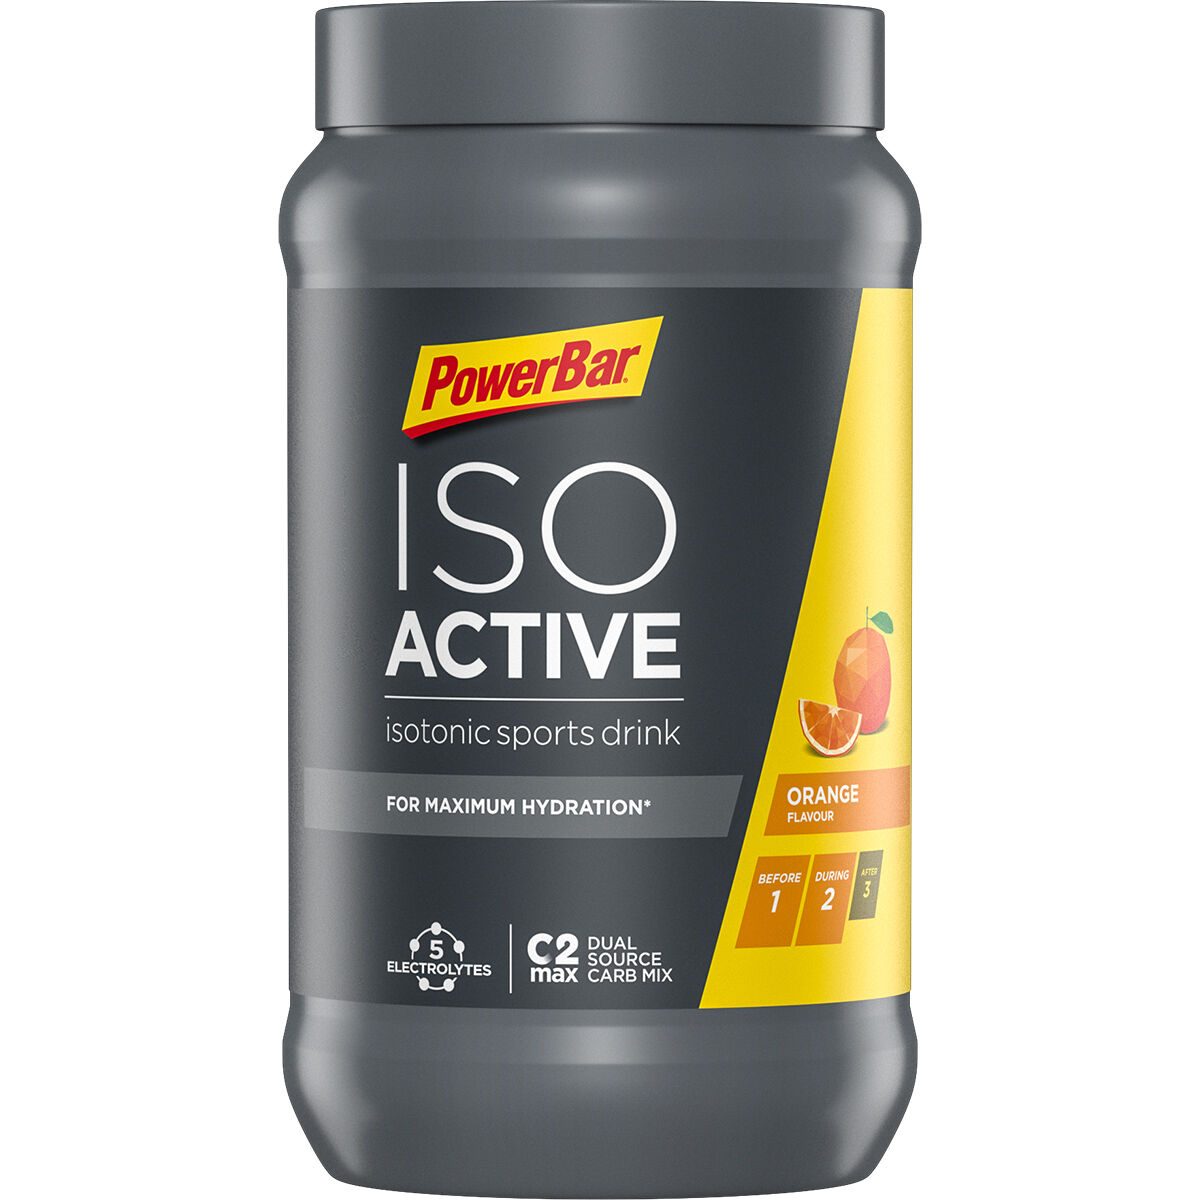 Powerbar Isoactive Orange 600g - Isotonisches Sportgetränk - 5 Elektrolyte